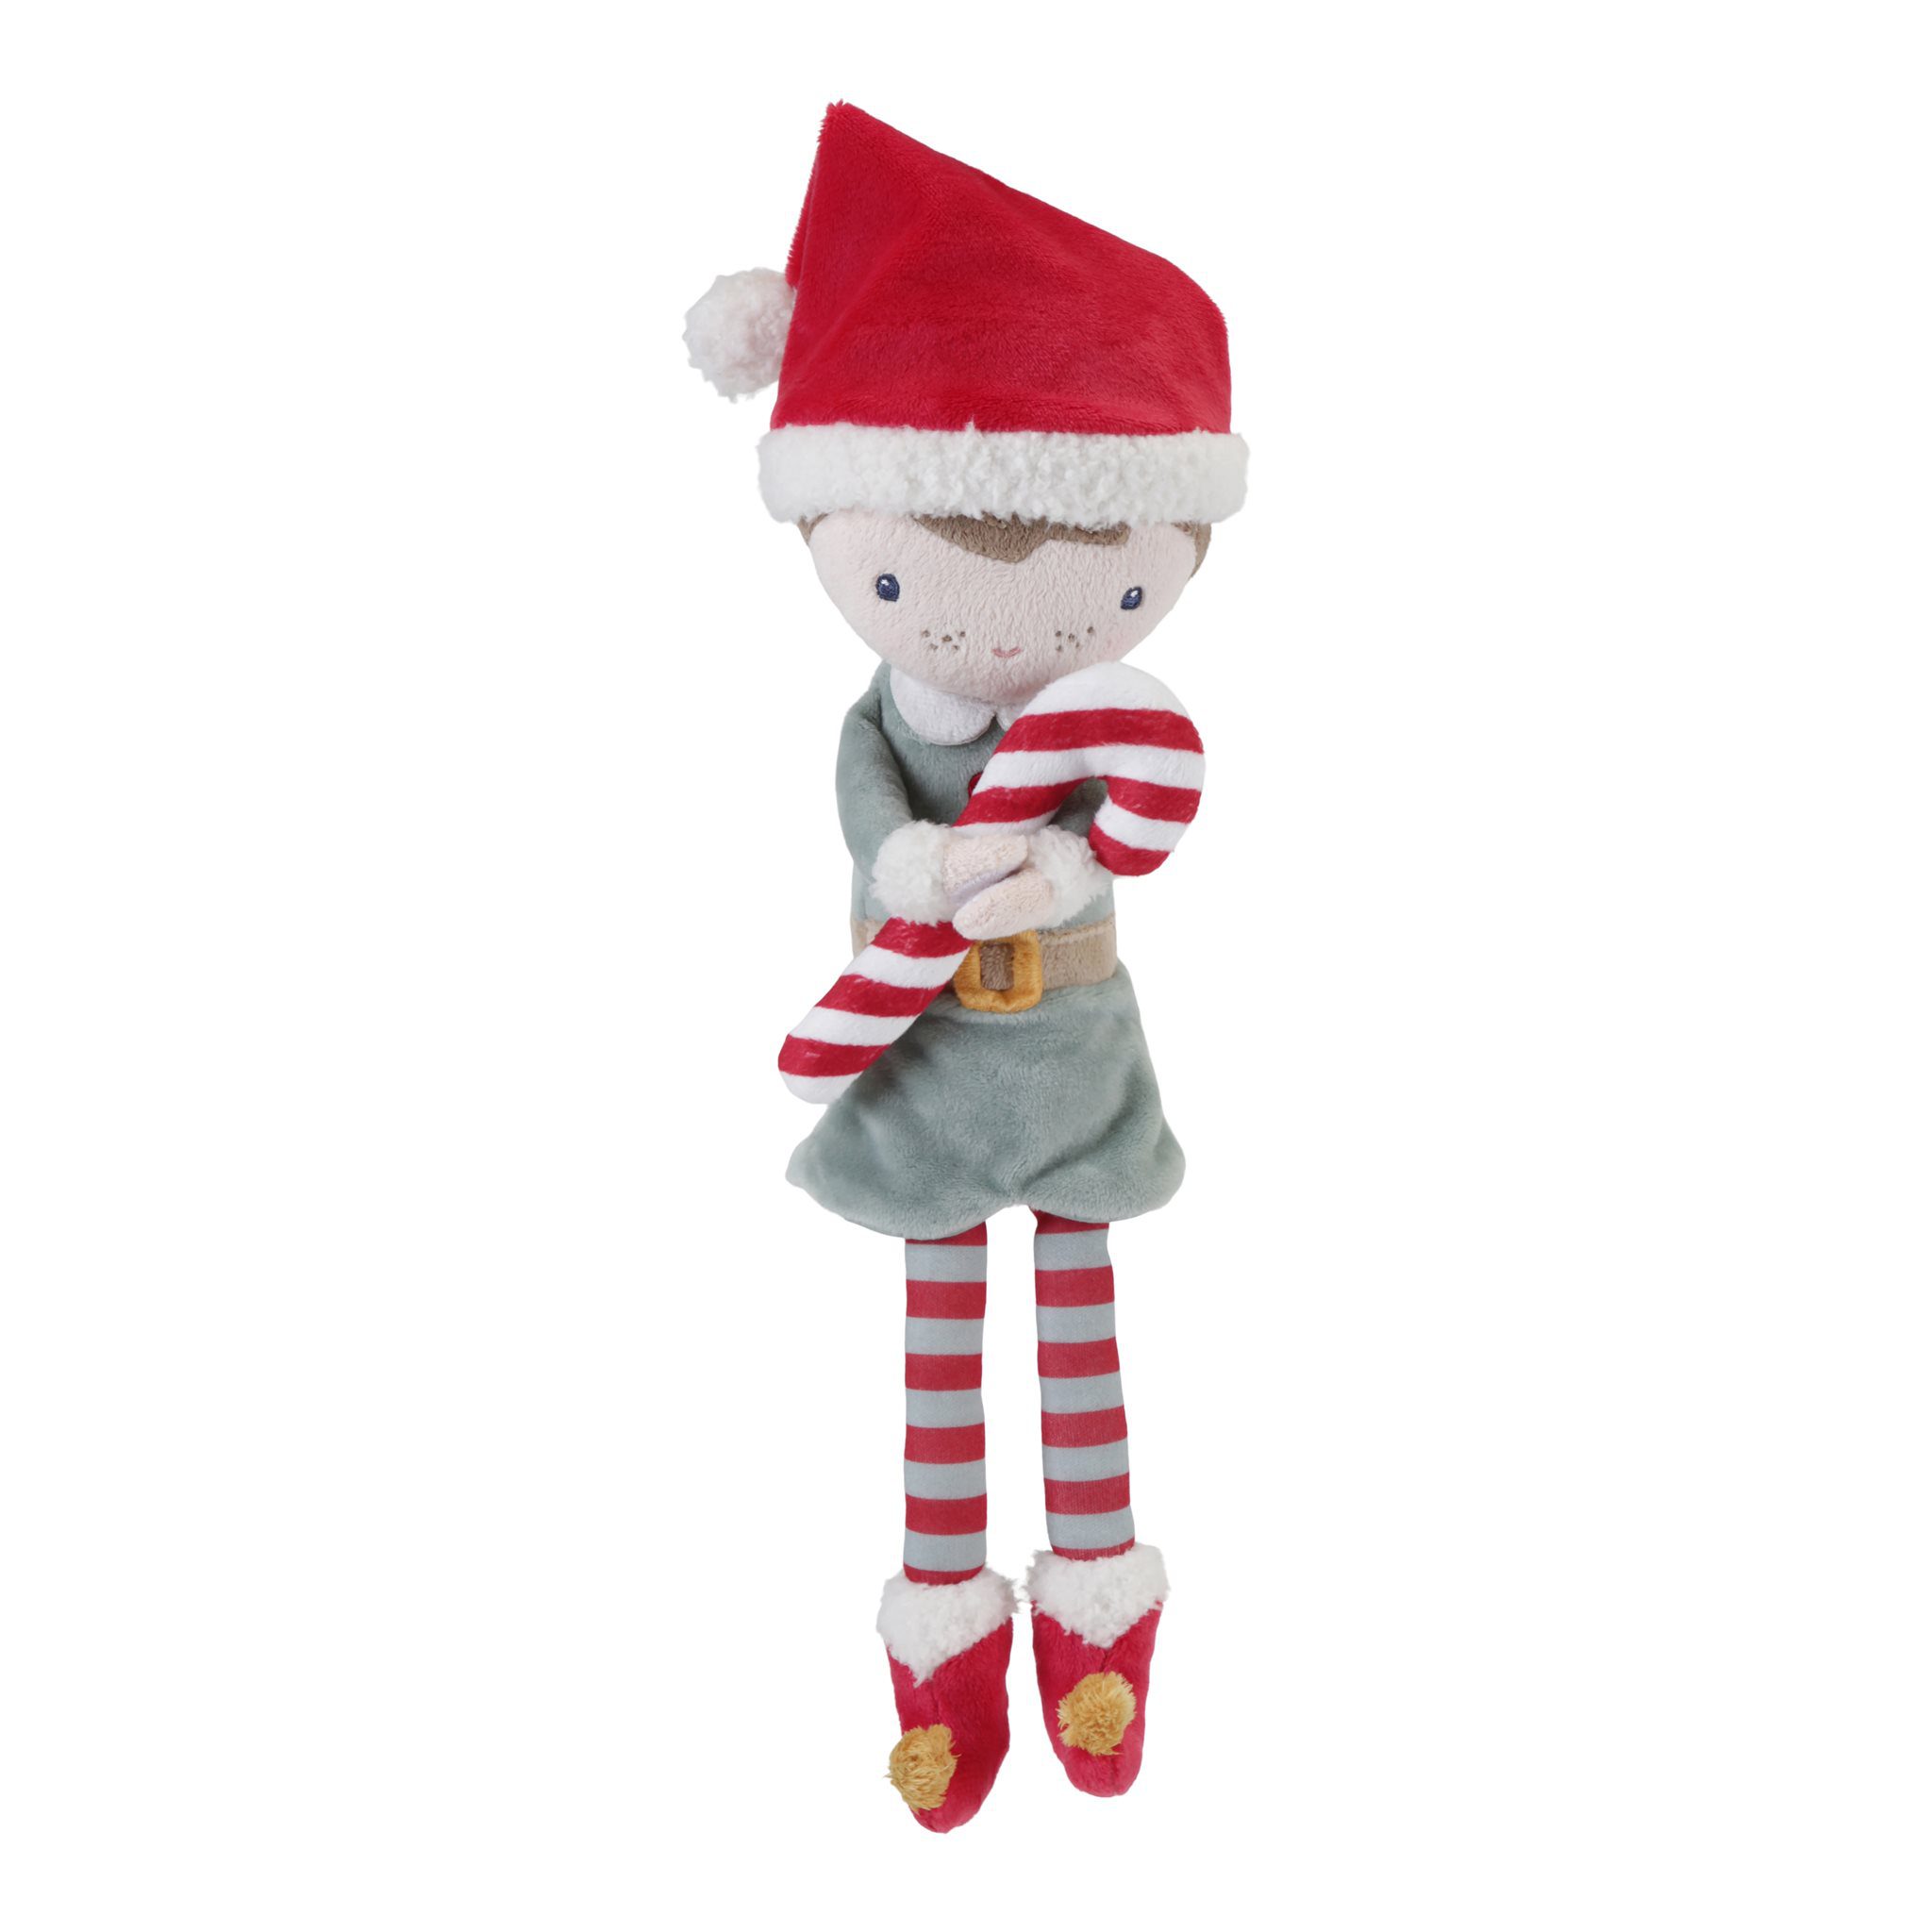 Knuffelpop Kerst Jim 35cm – Red